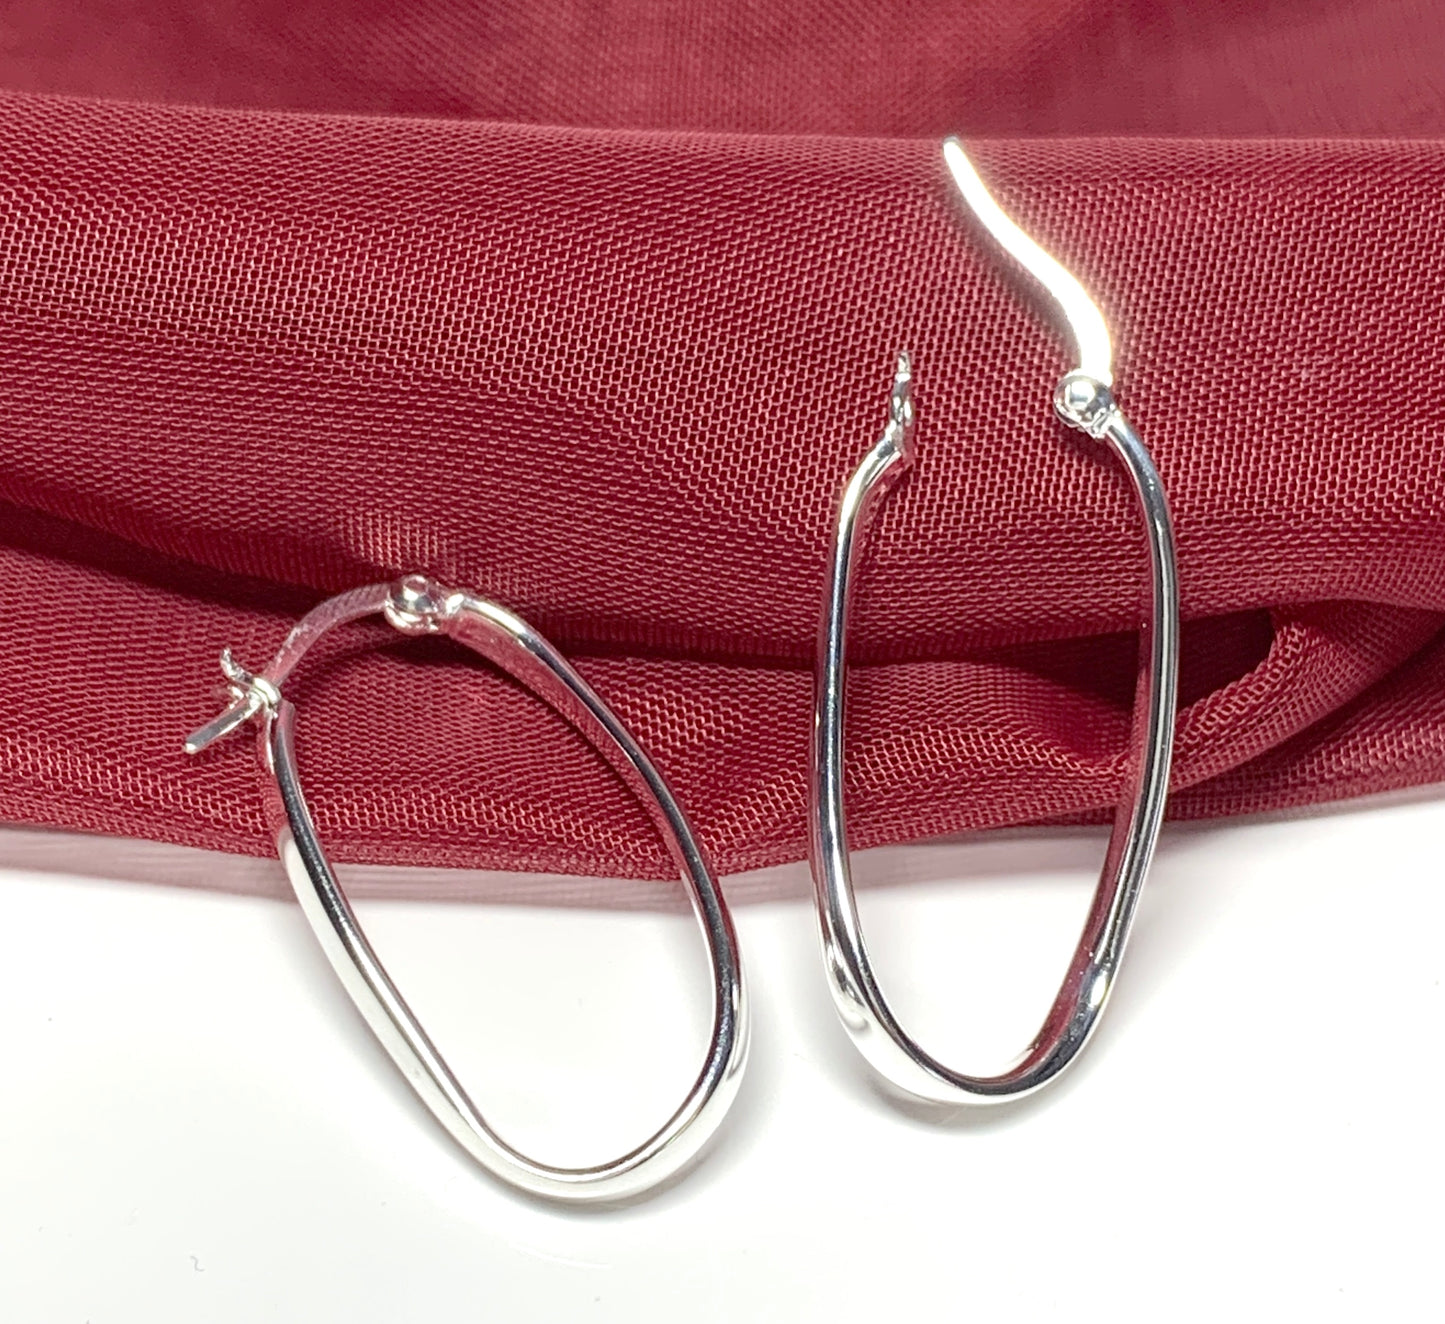 Oval twisted polished hoop earrings sterling silver